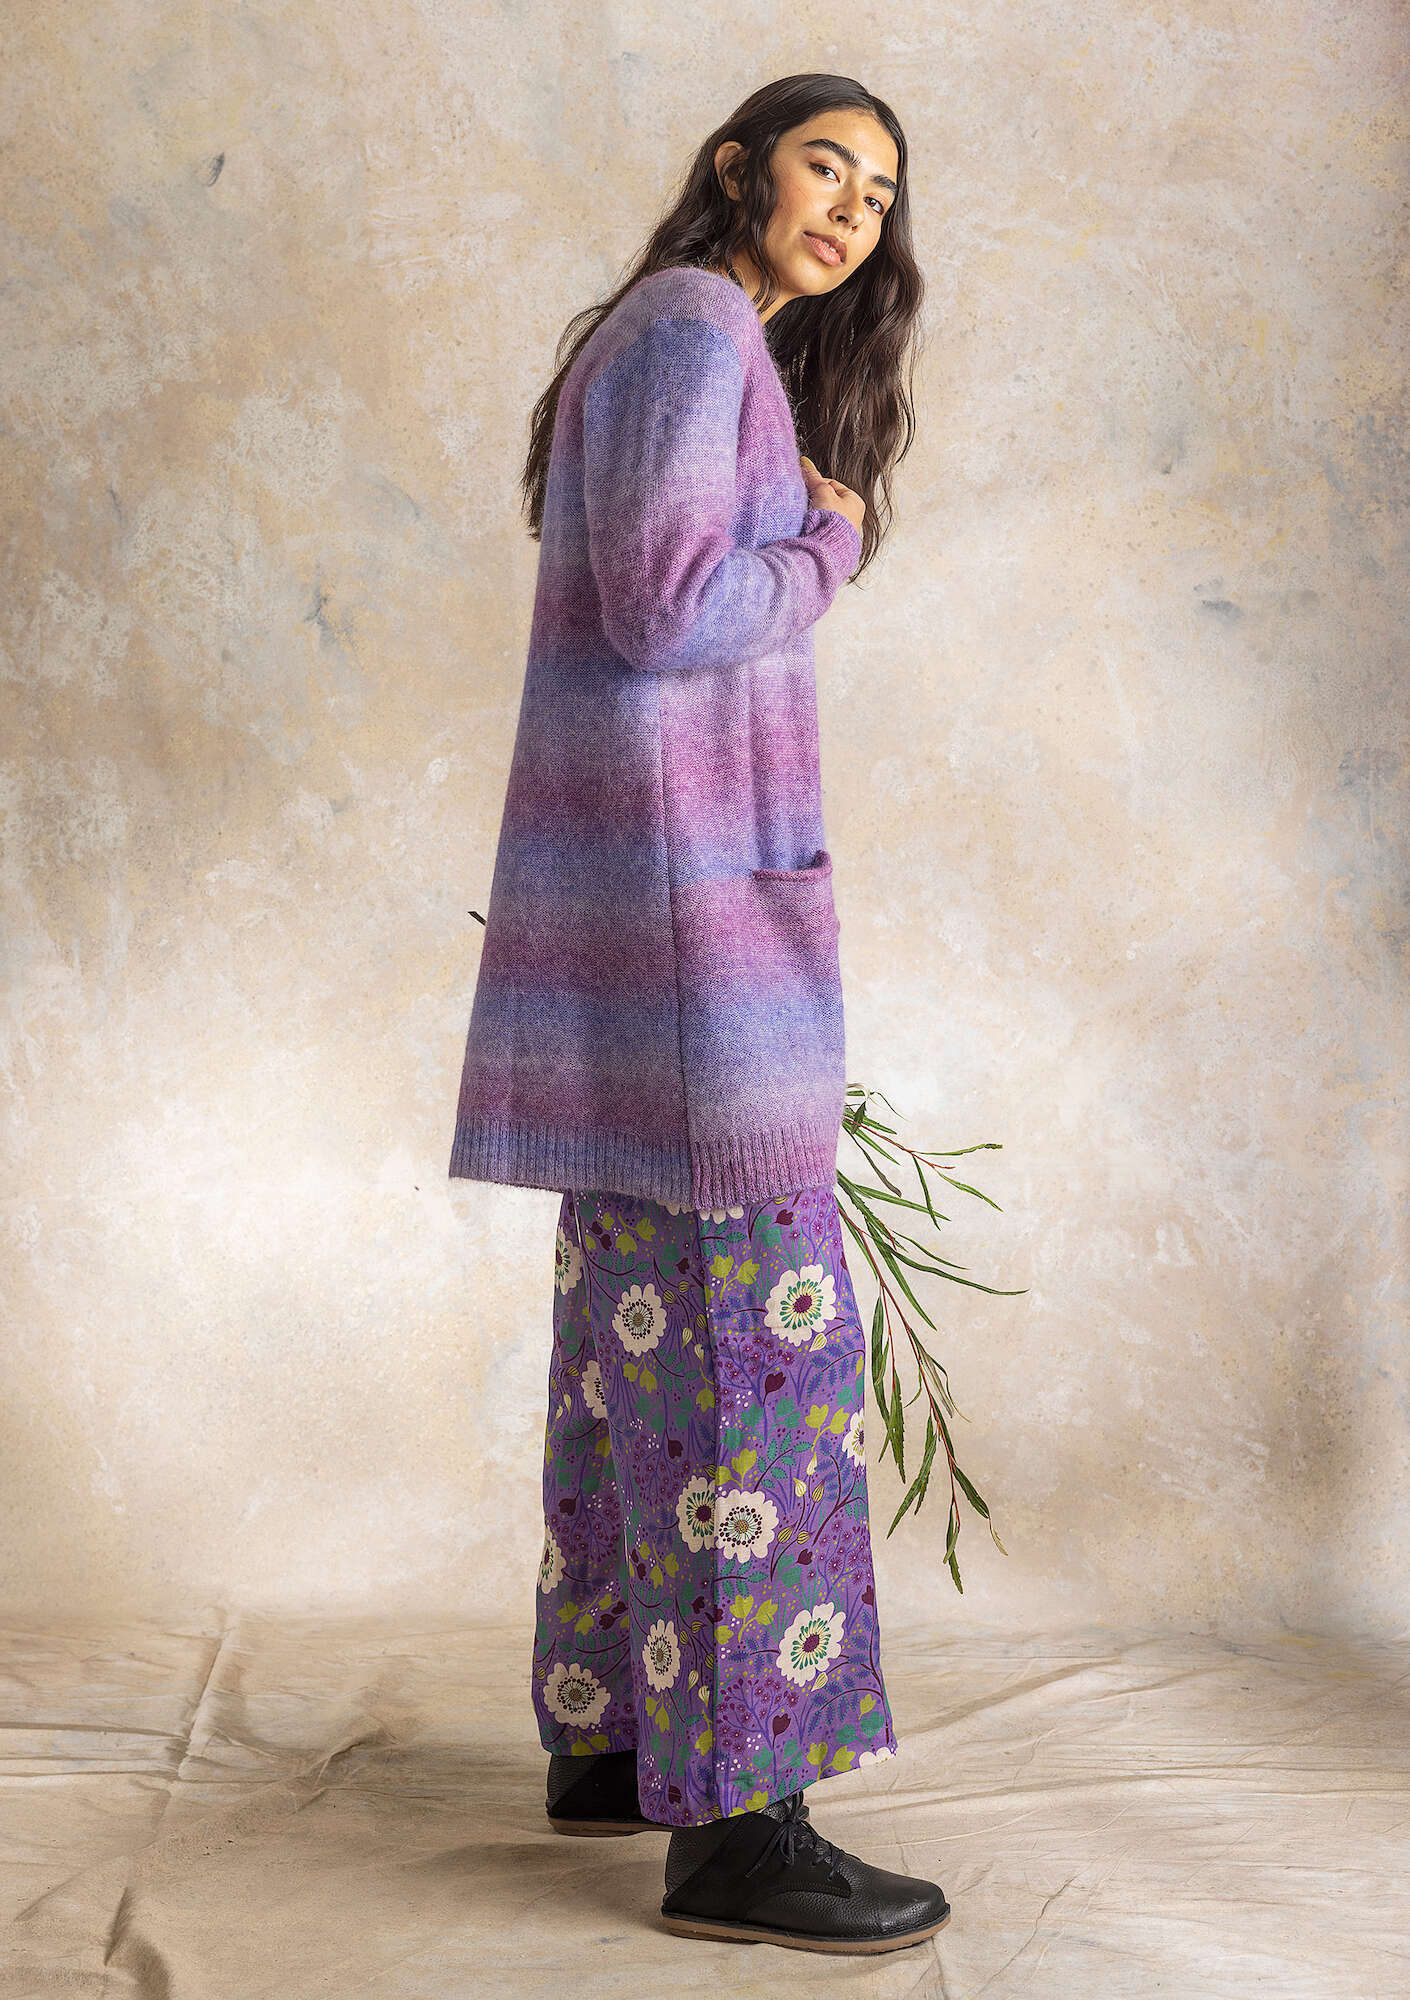  “Bello” long cardigan in alpaca/wool blend hyacinth